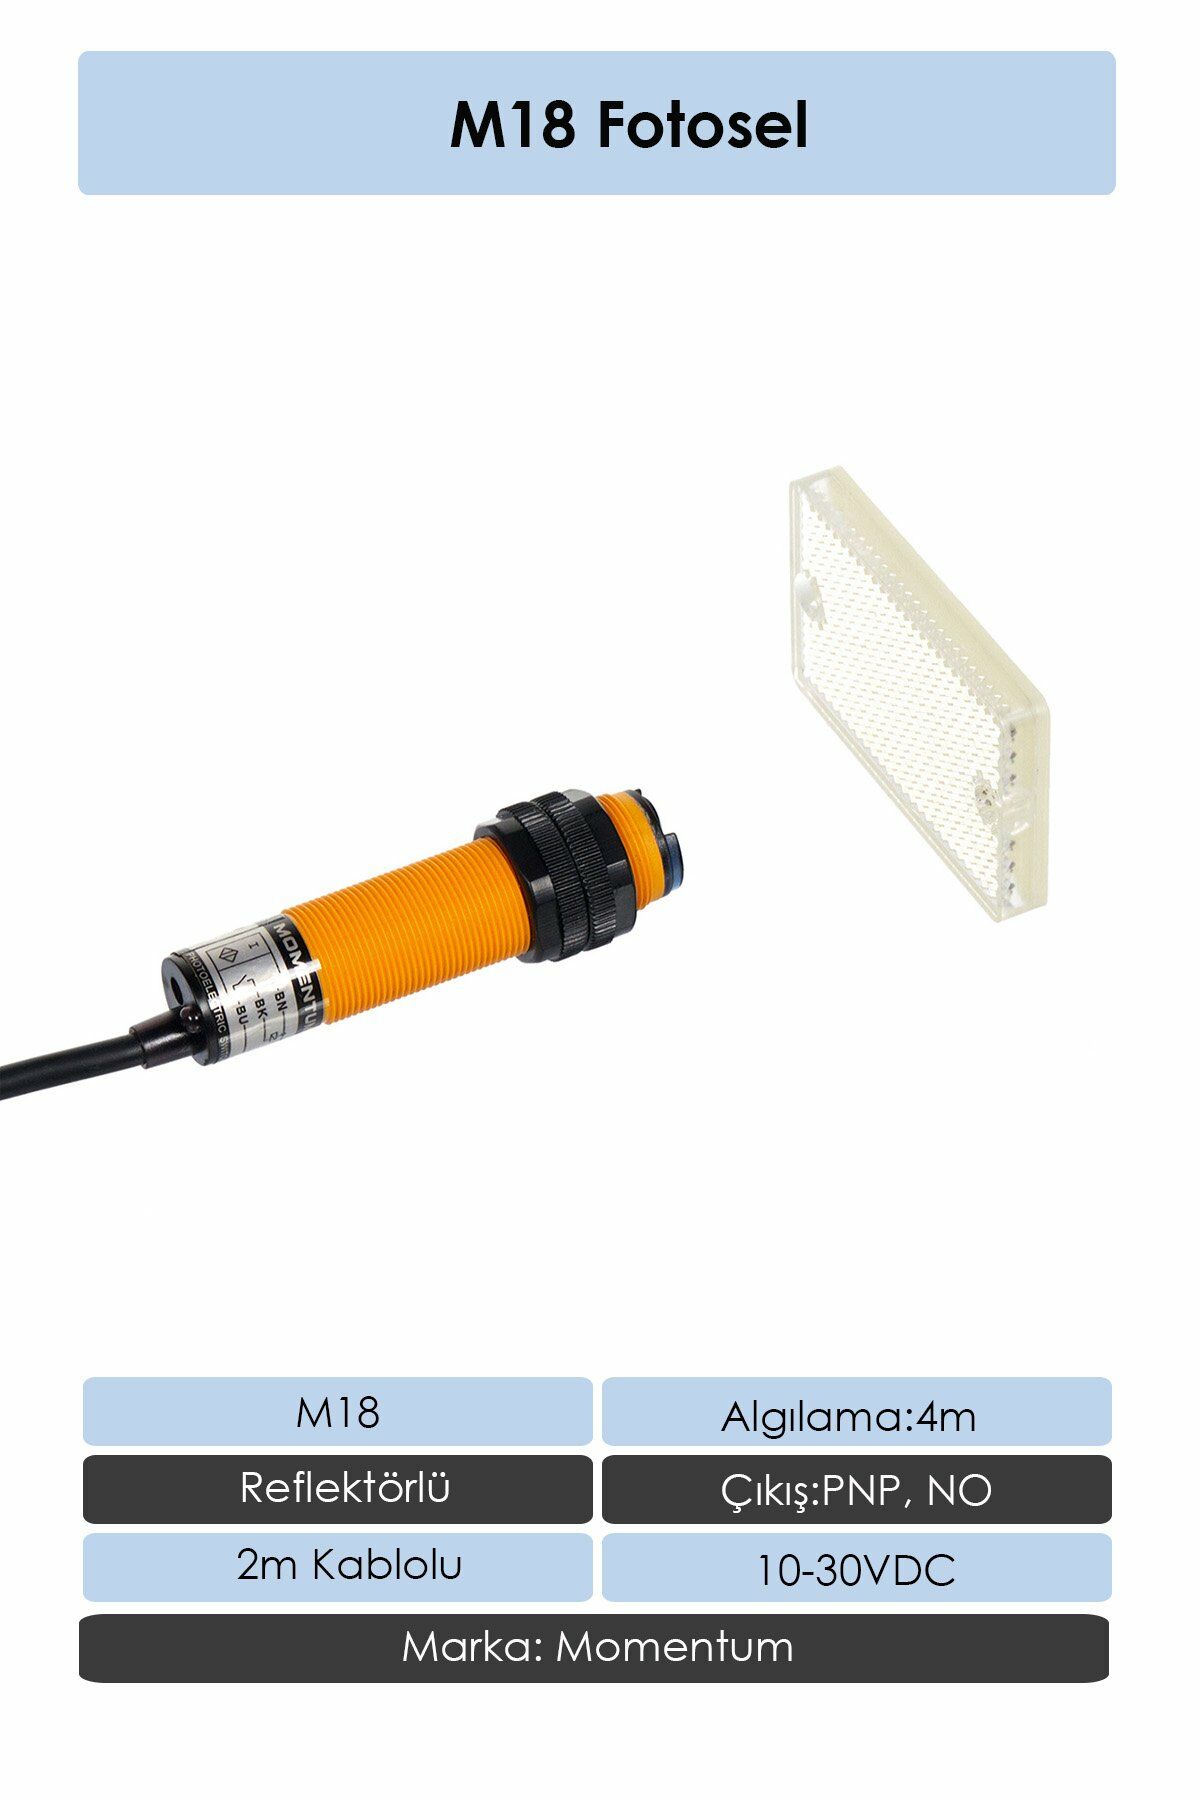 Momentum Fotosel M18 4m Reflektörlü 2m Kablo PNP NO G18-3B4PA